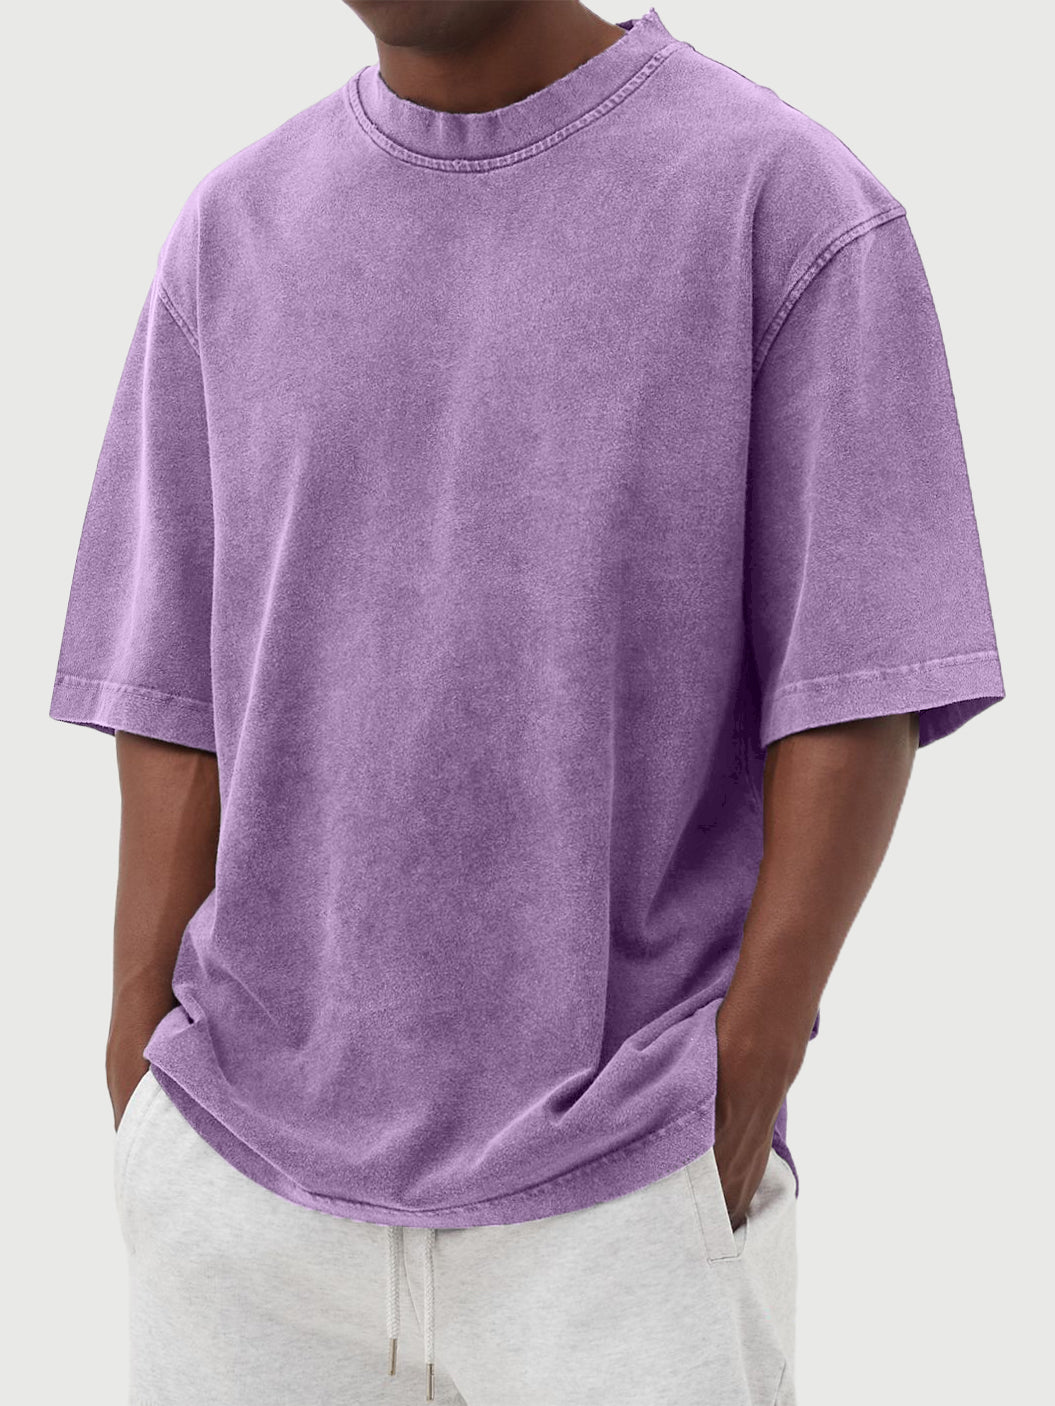 Men's Basic Washed Distressed Cotton Round Neck Short Sleeve T-Shirt